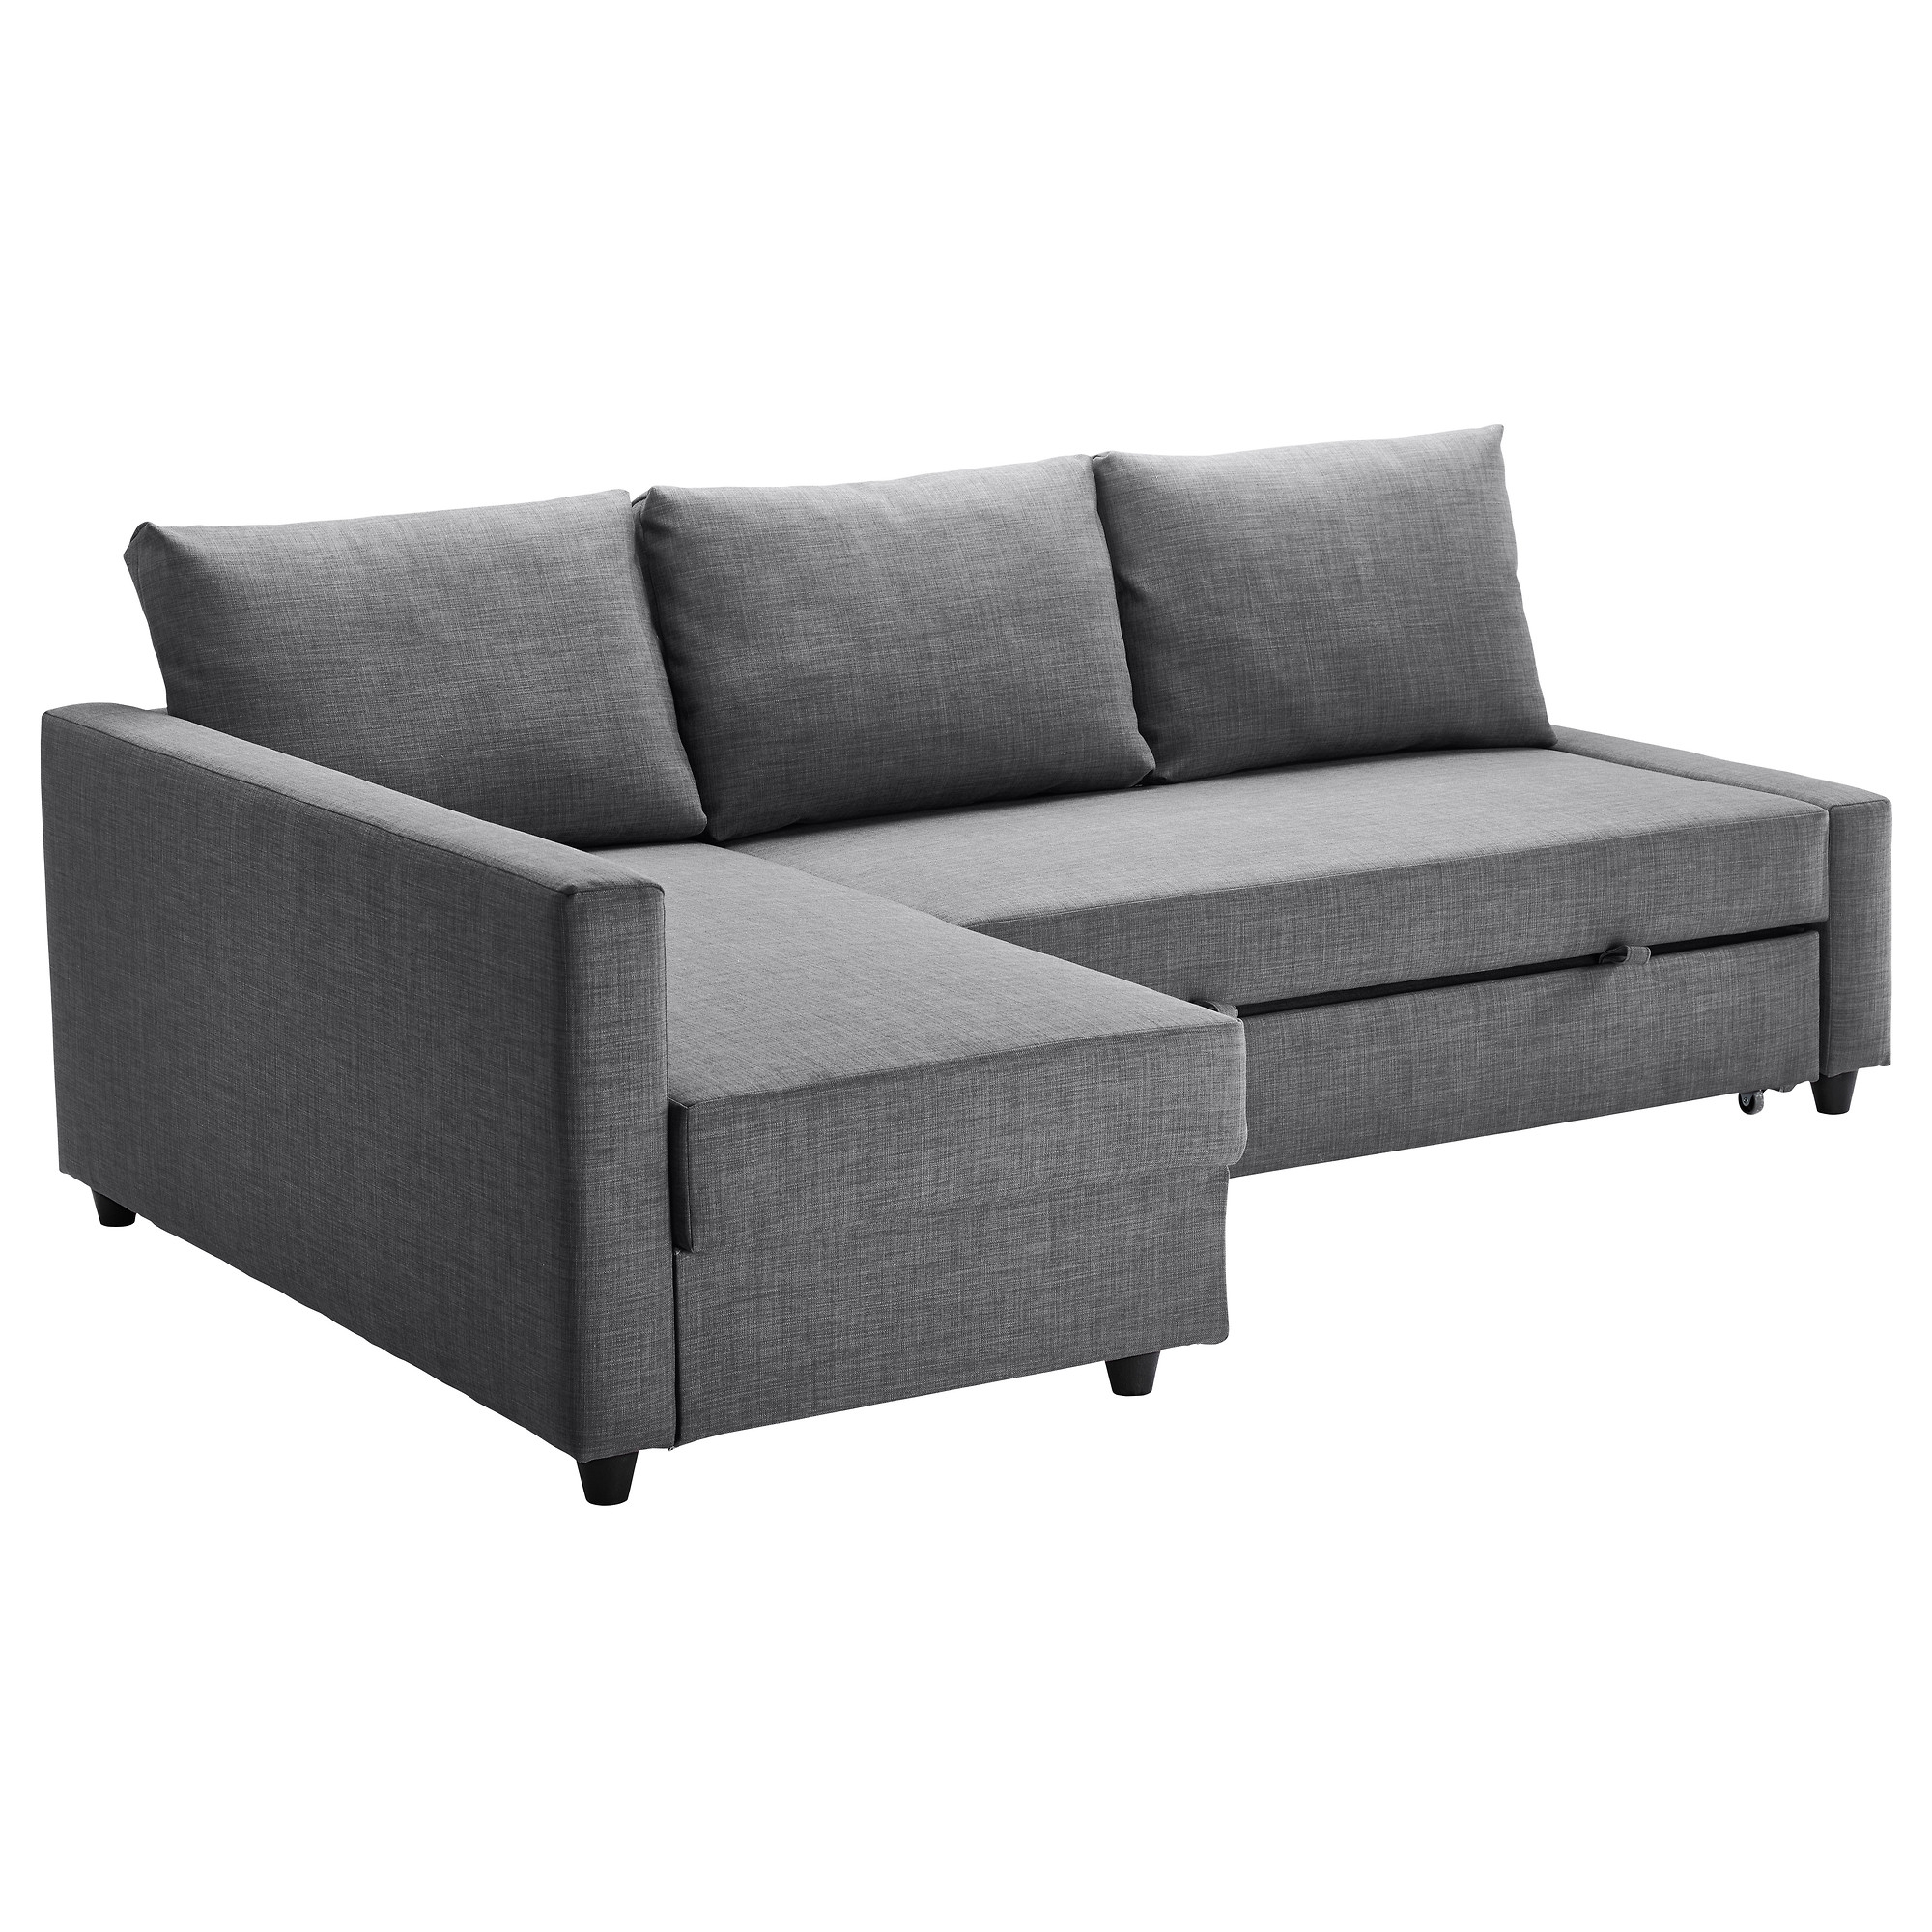  Ikea Sectional Sofa  Beds decordip com